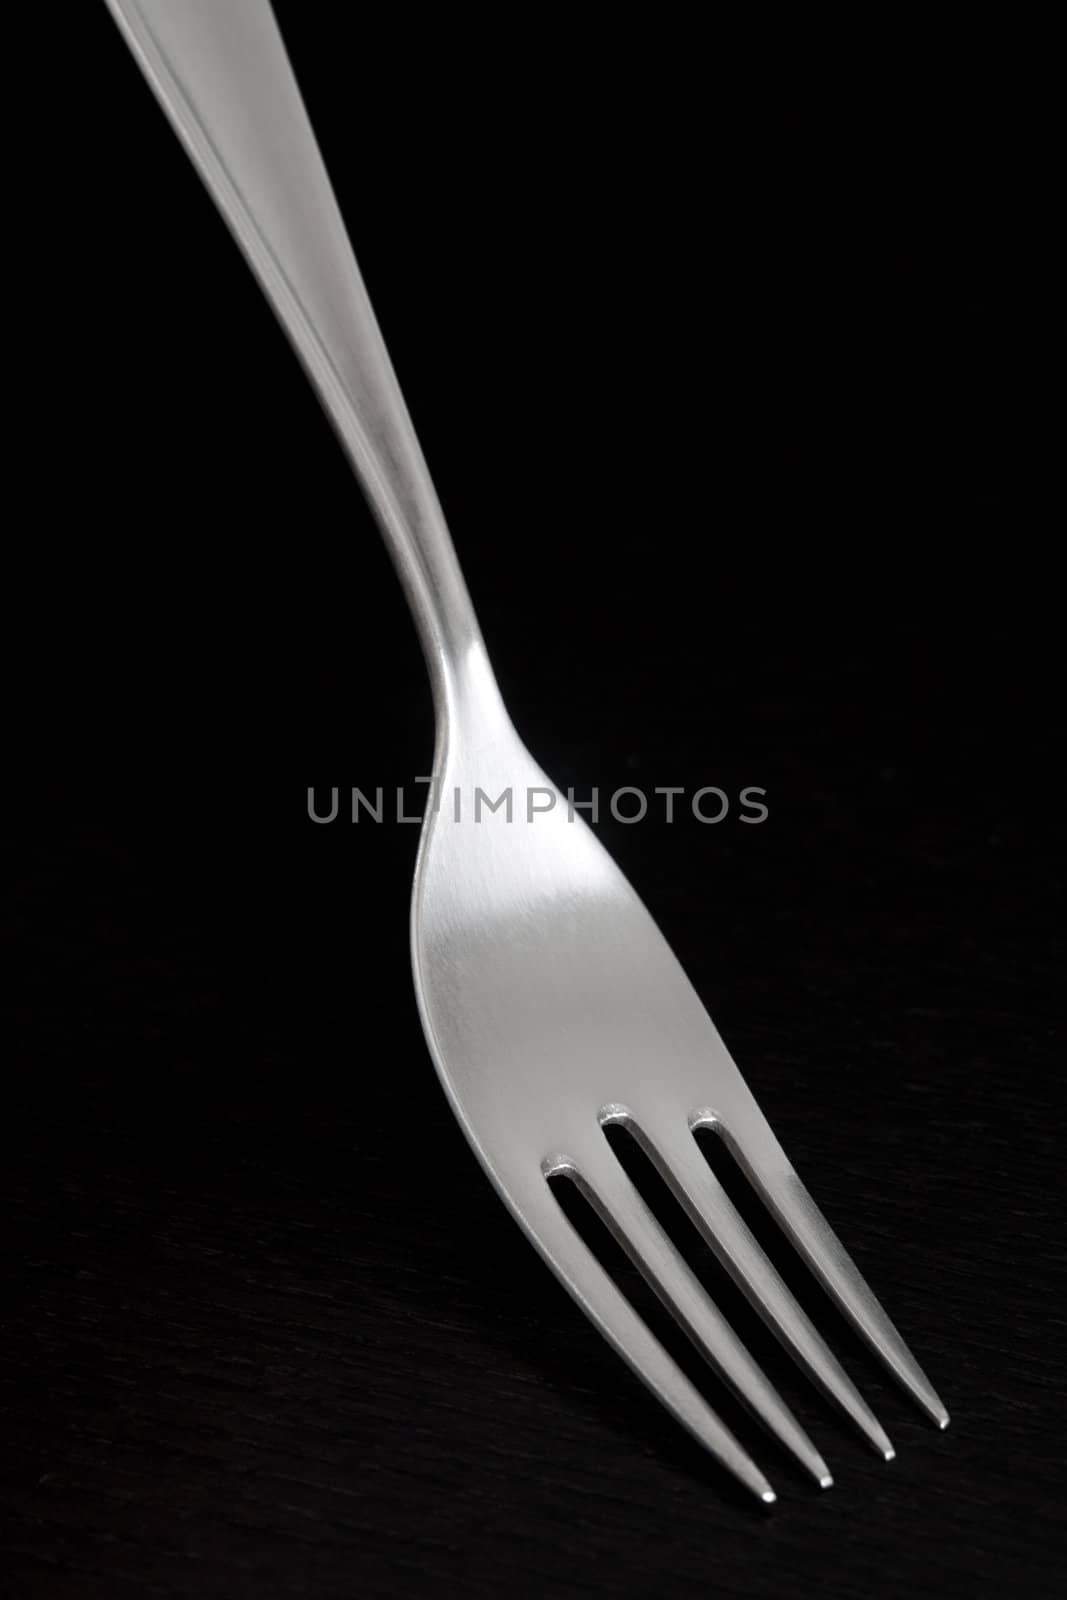 Elegant silver fork from 70s, on dark background.